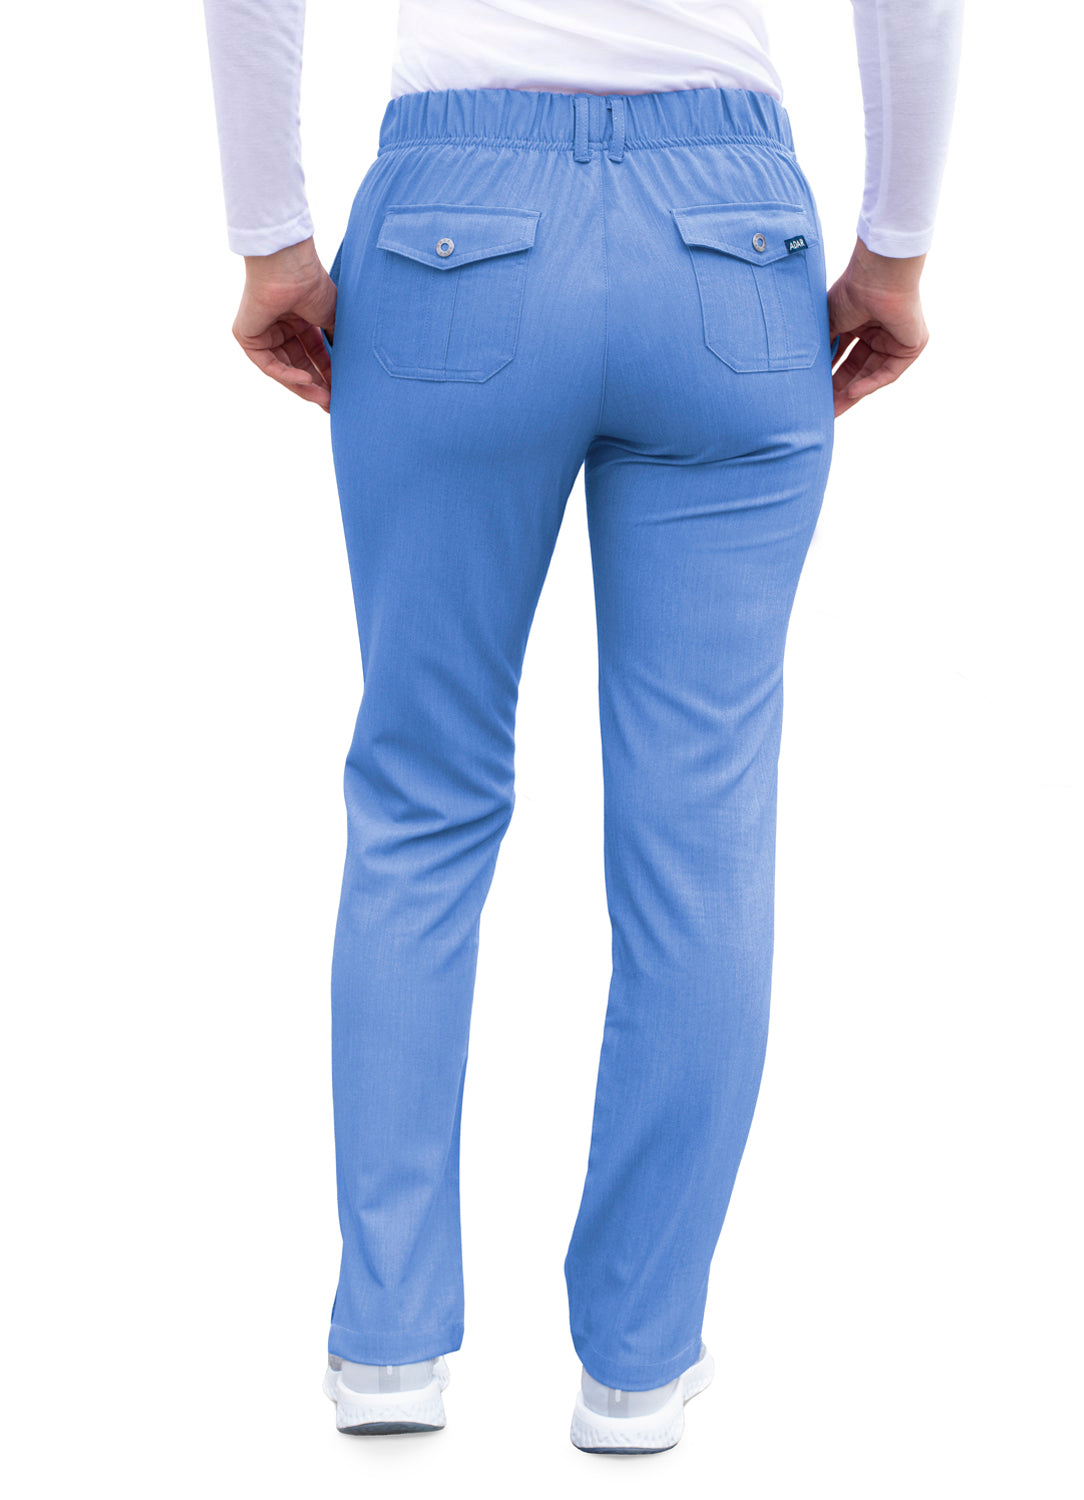 Women's Slim Fit 6 Pocket Pant Petite